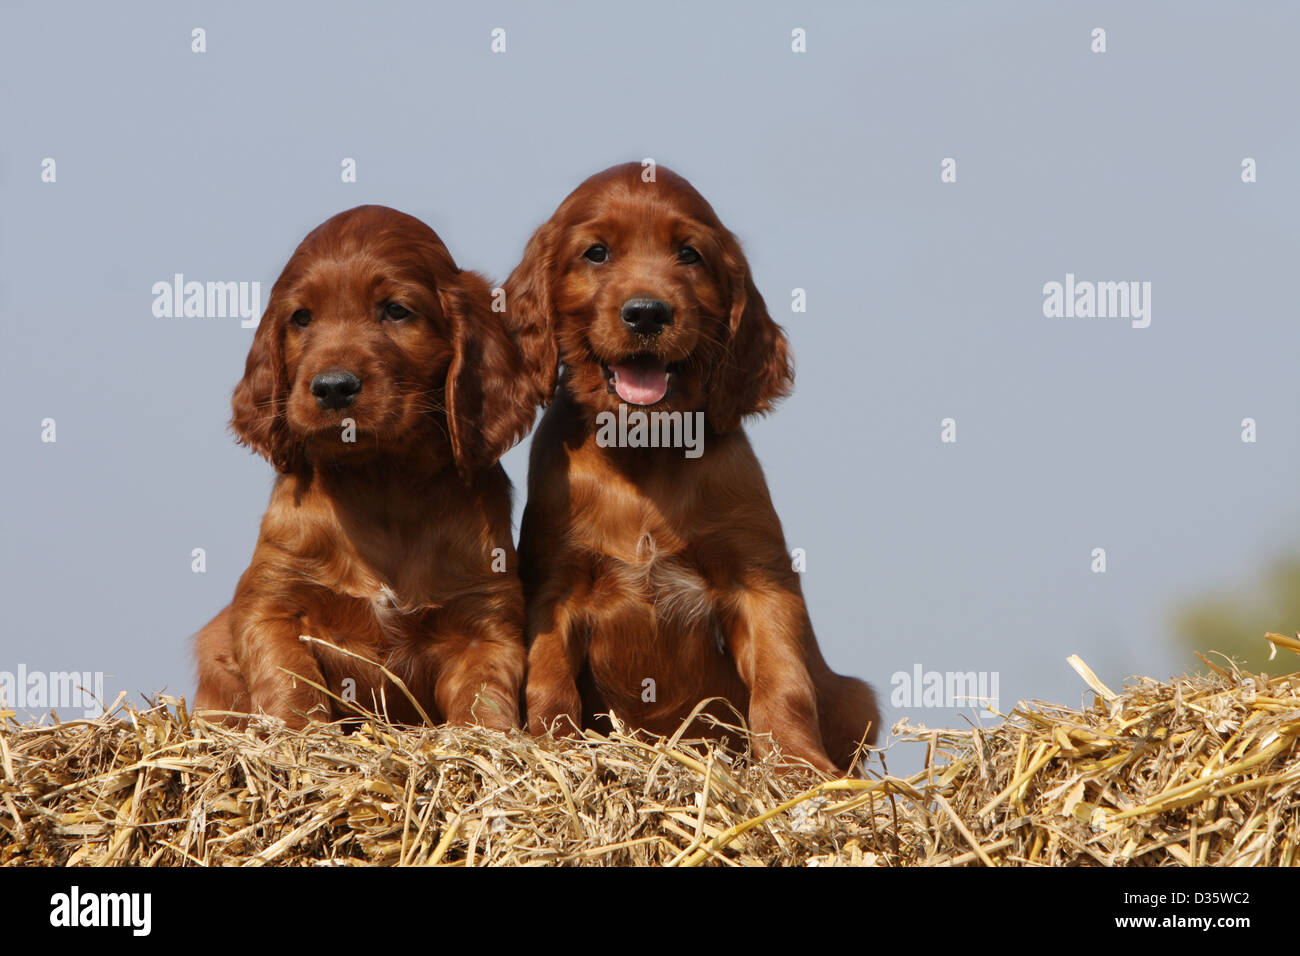 Dog Irish Setter Red Setter Two Puppies Sitting On The Straw Stock Photo Alamy